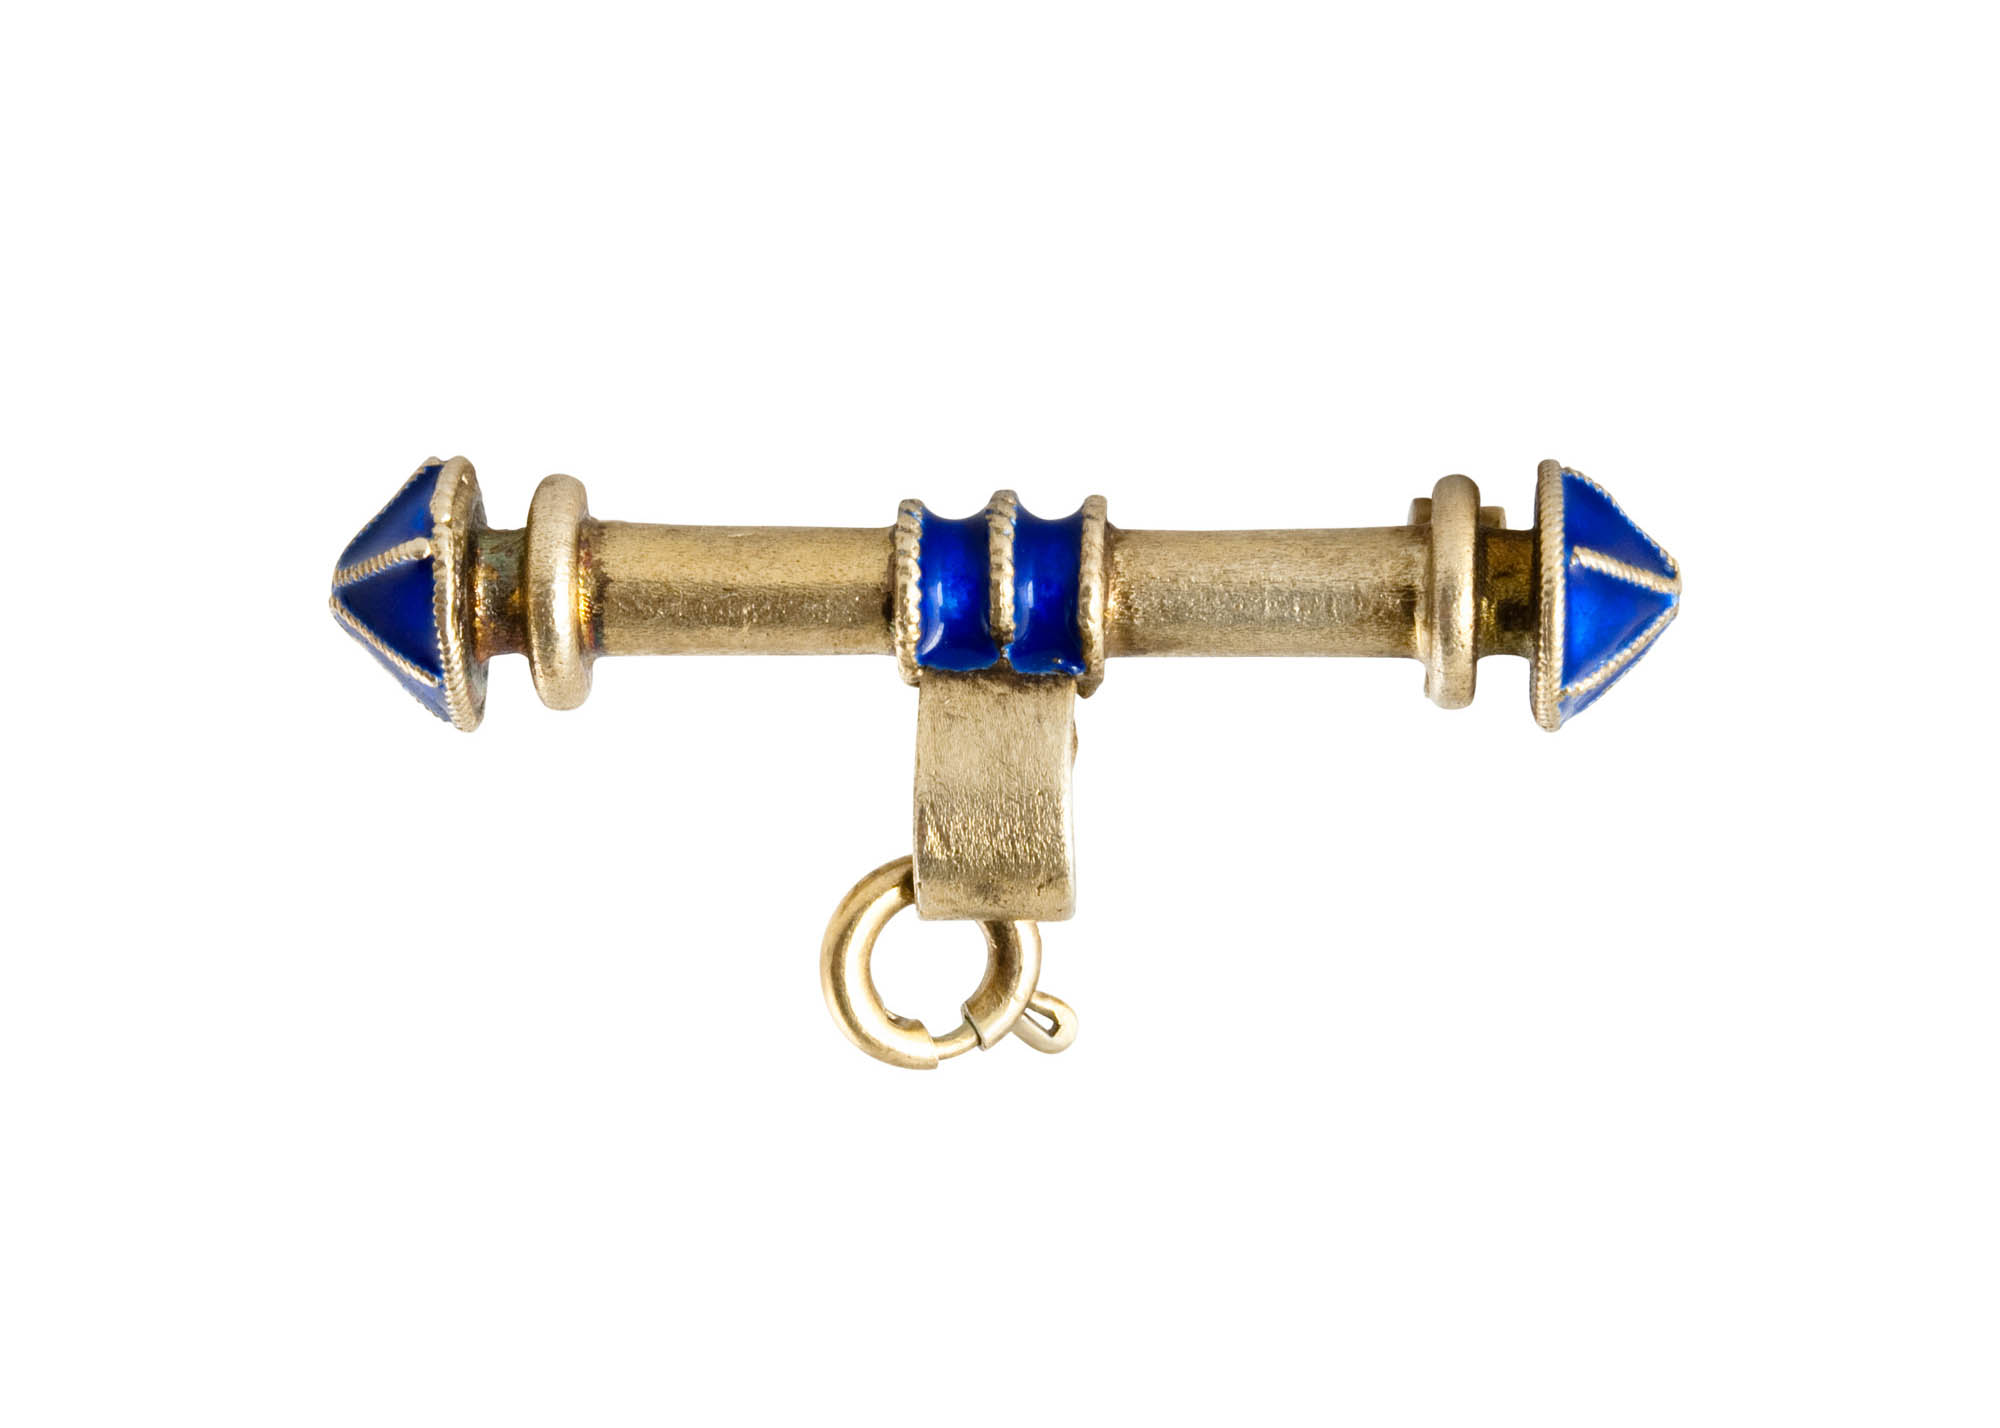 Buy Cobalt Pin for Faberge Egg Pendant at GoldenCockerel.com